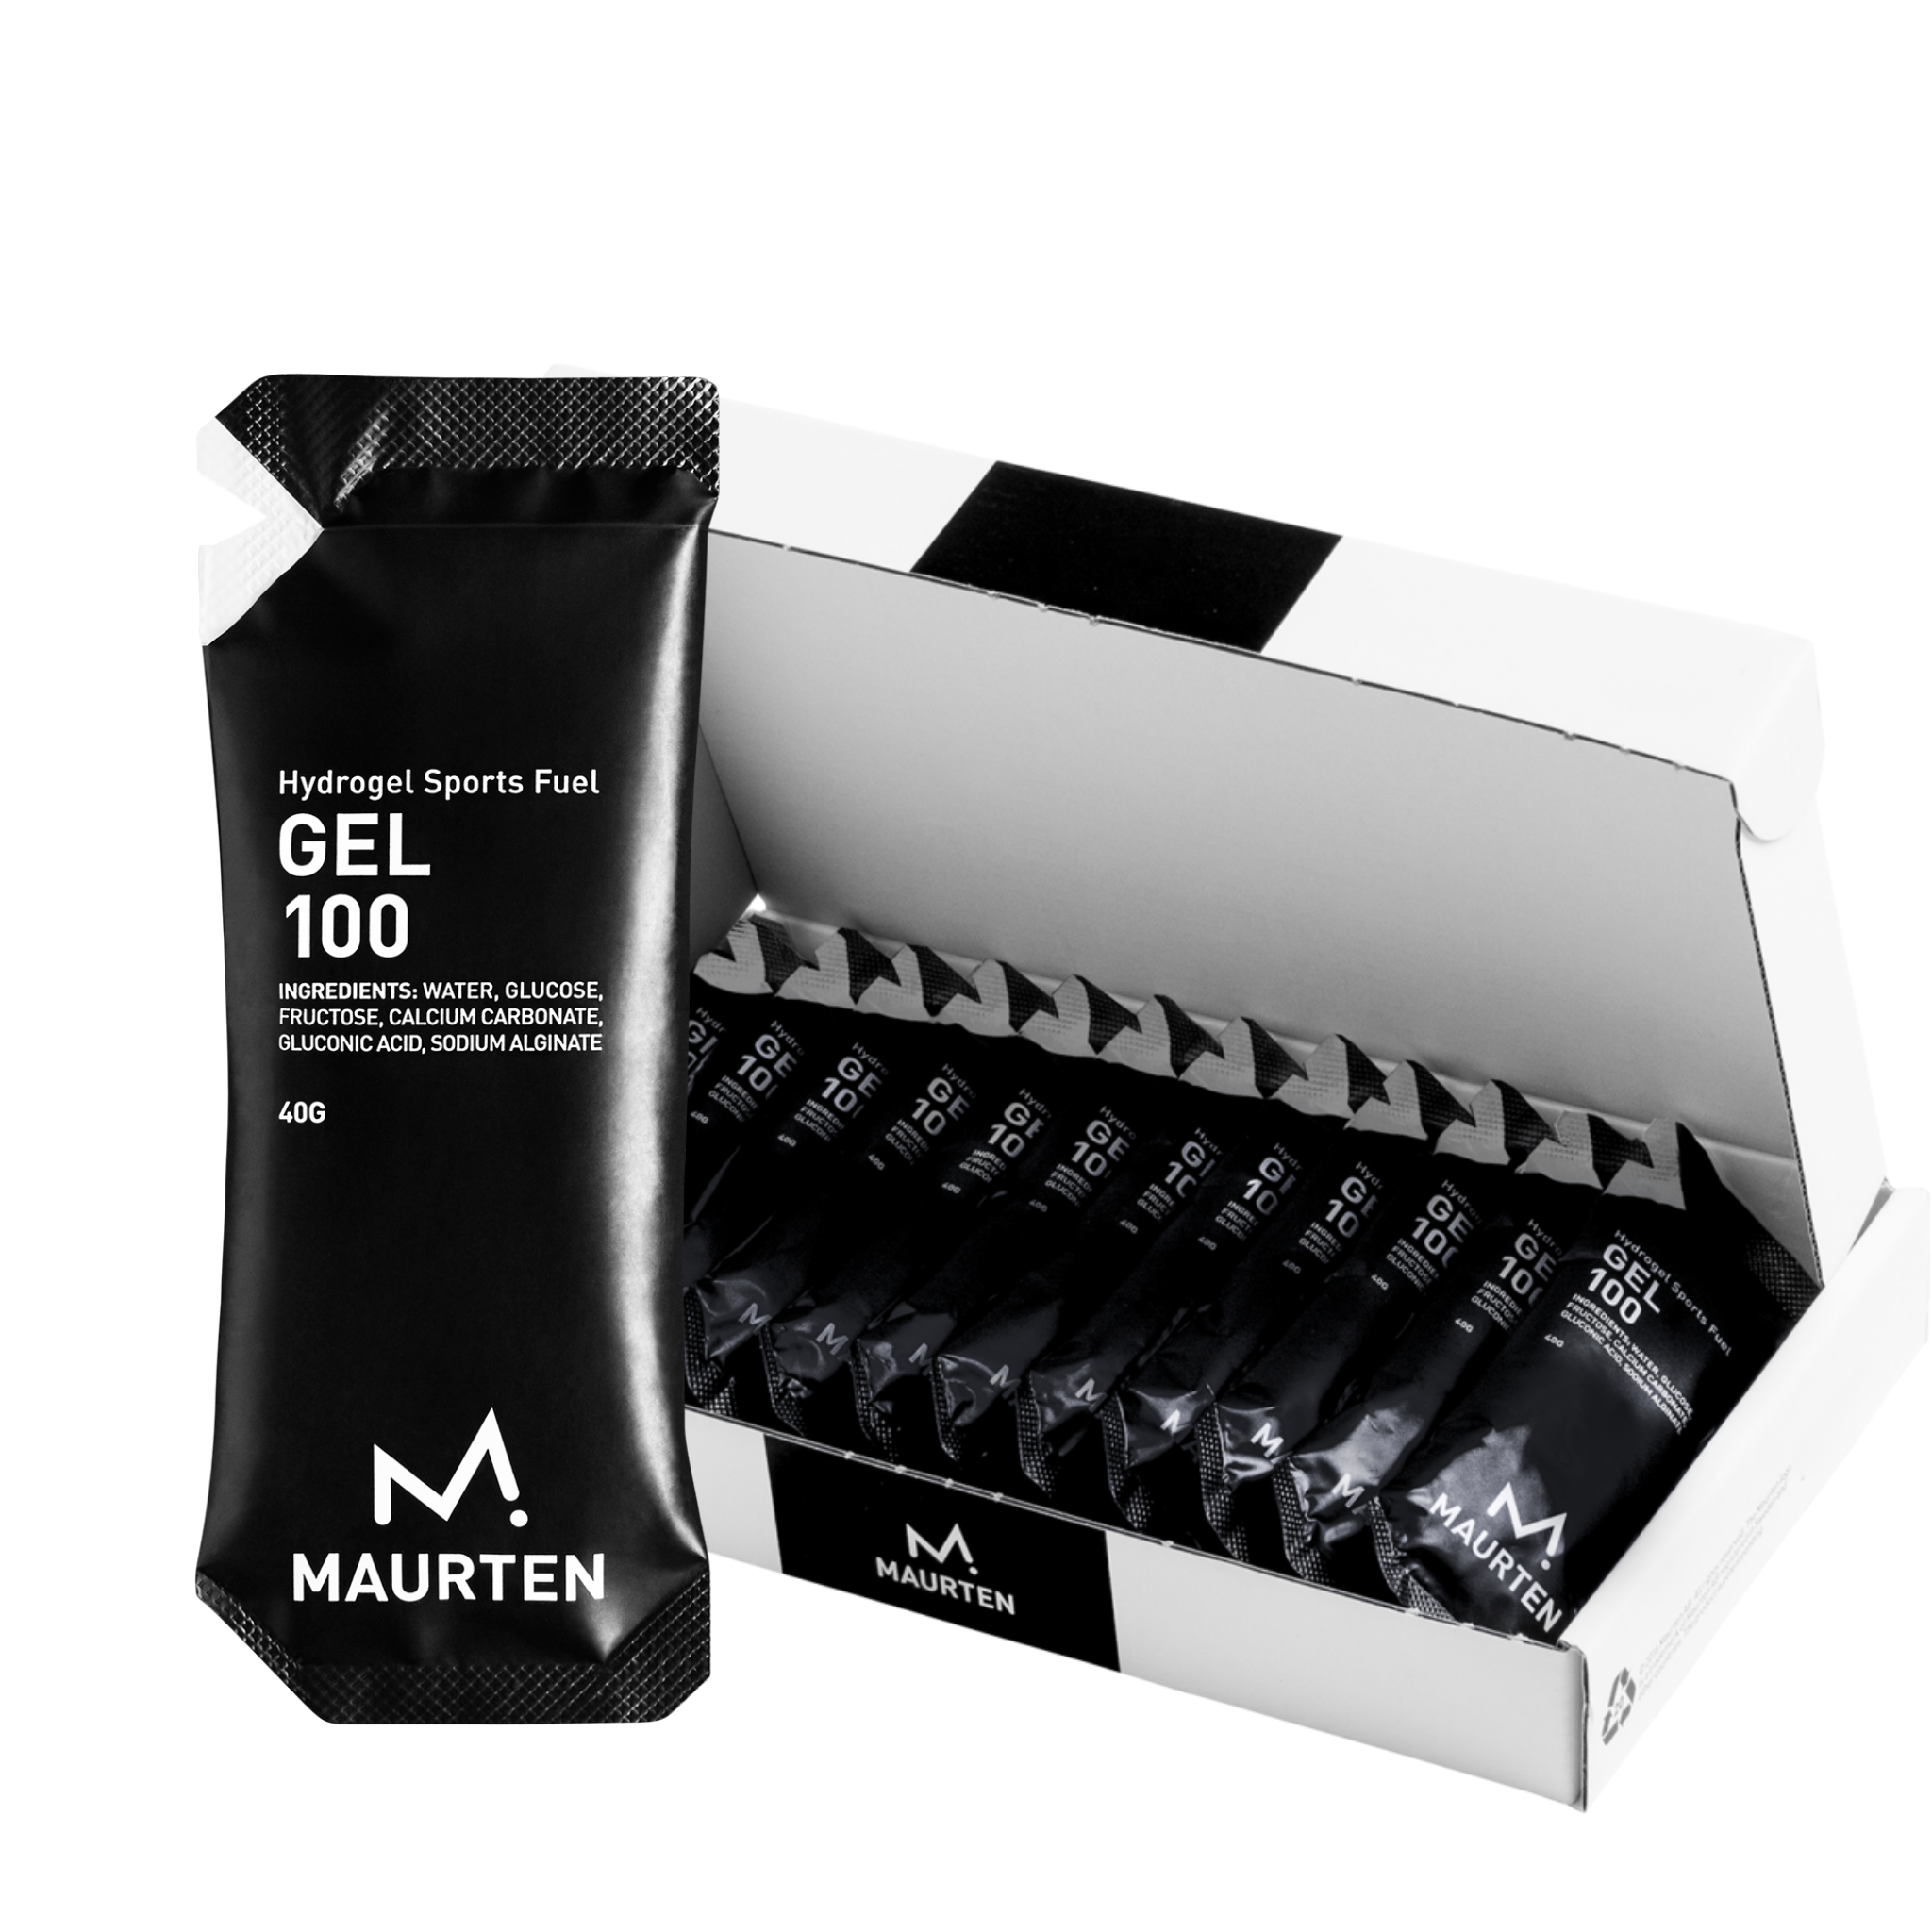 Maurten Energigel Gel 100 Box 40 g (12 pack)